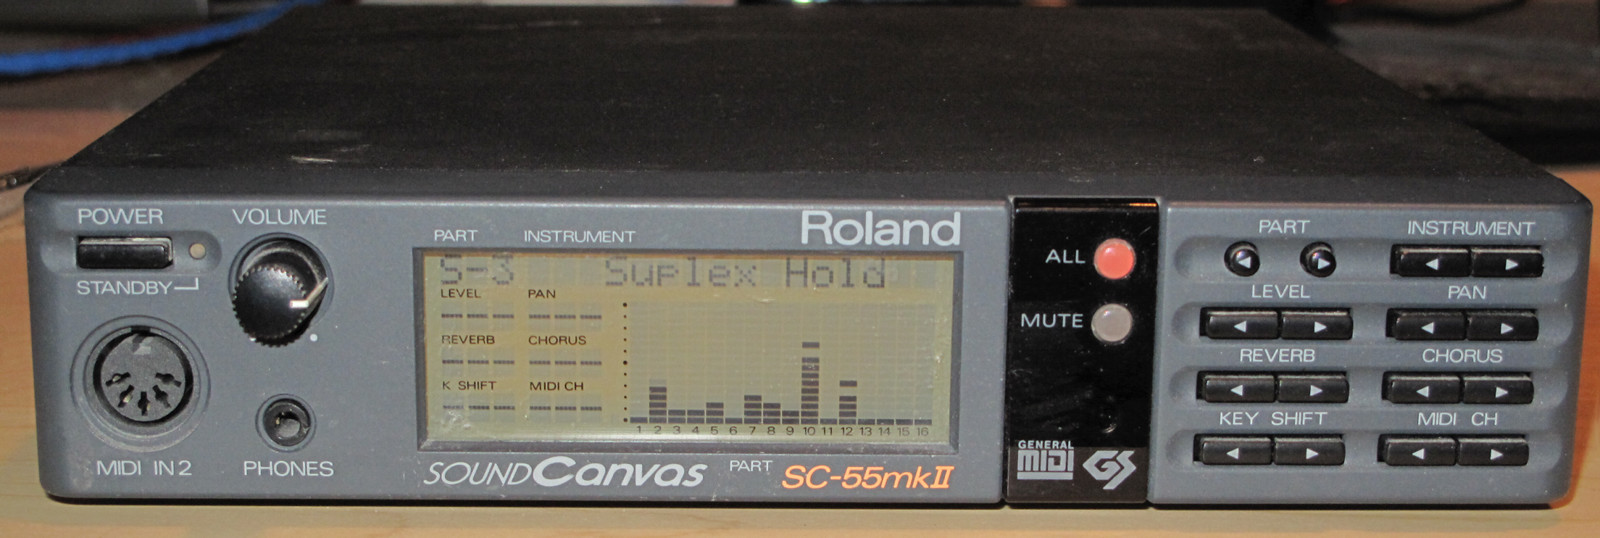 roland sound canvas model sc-55